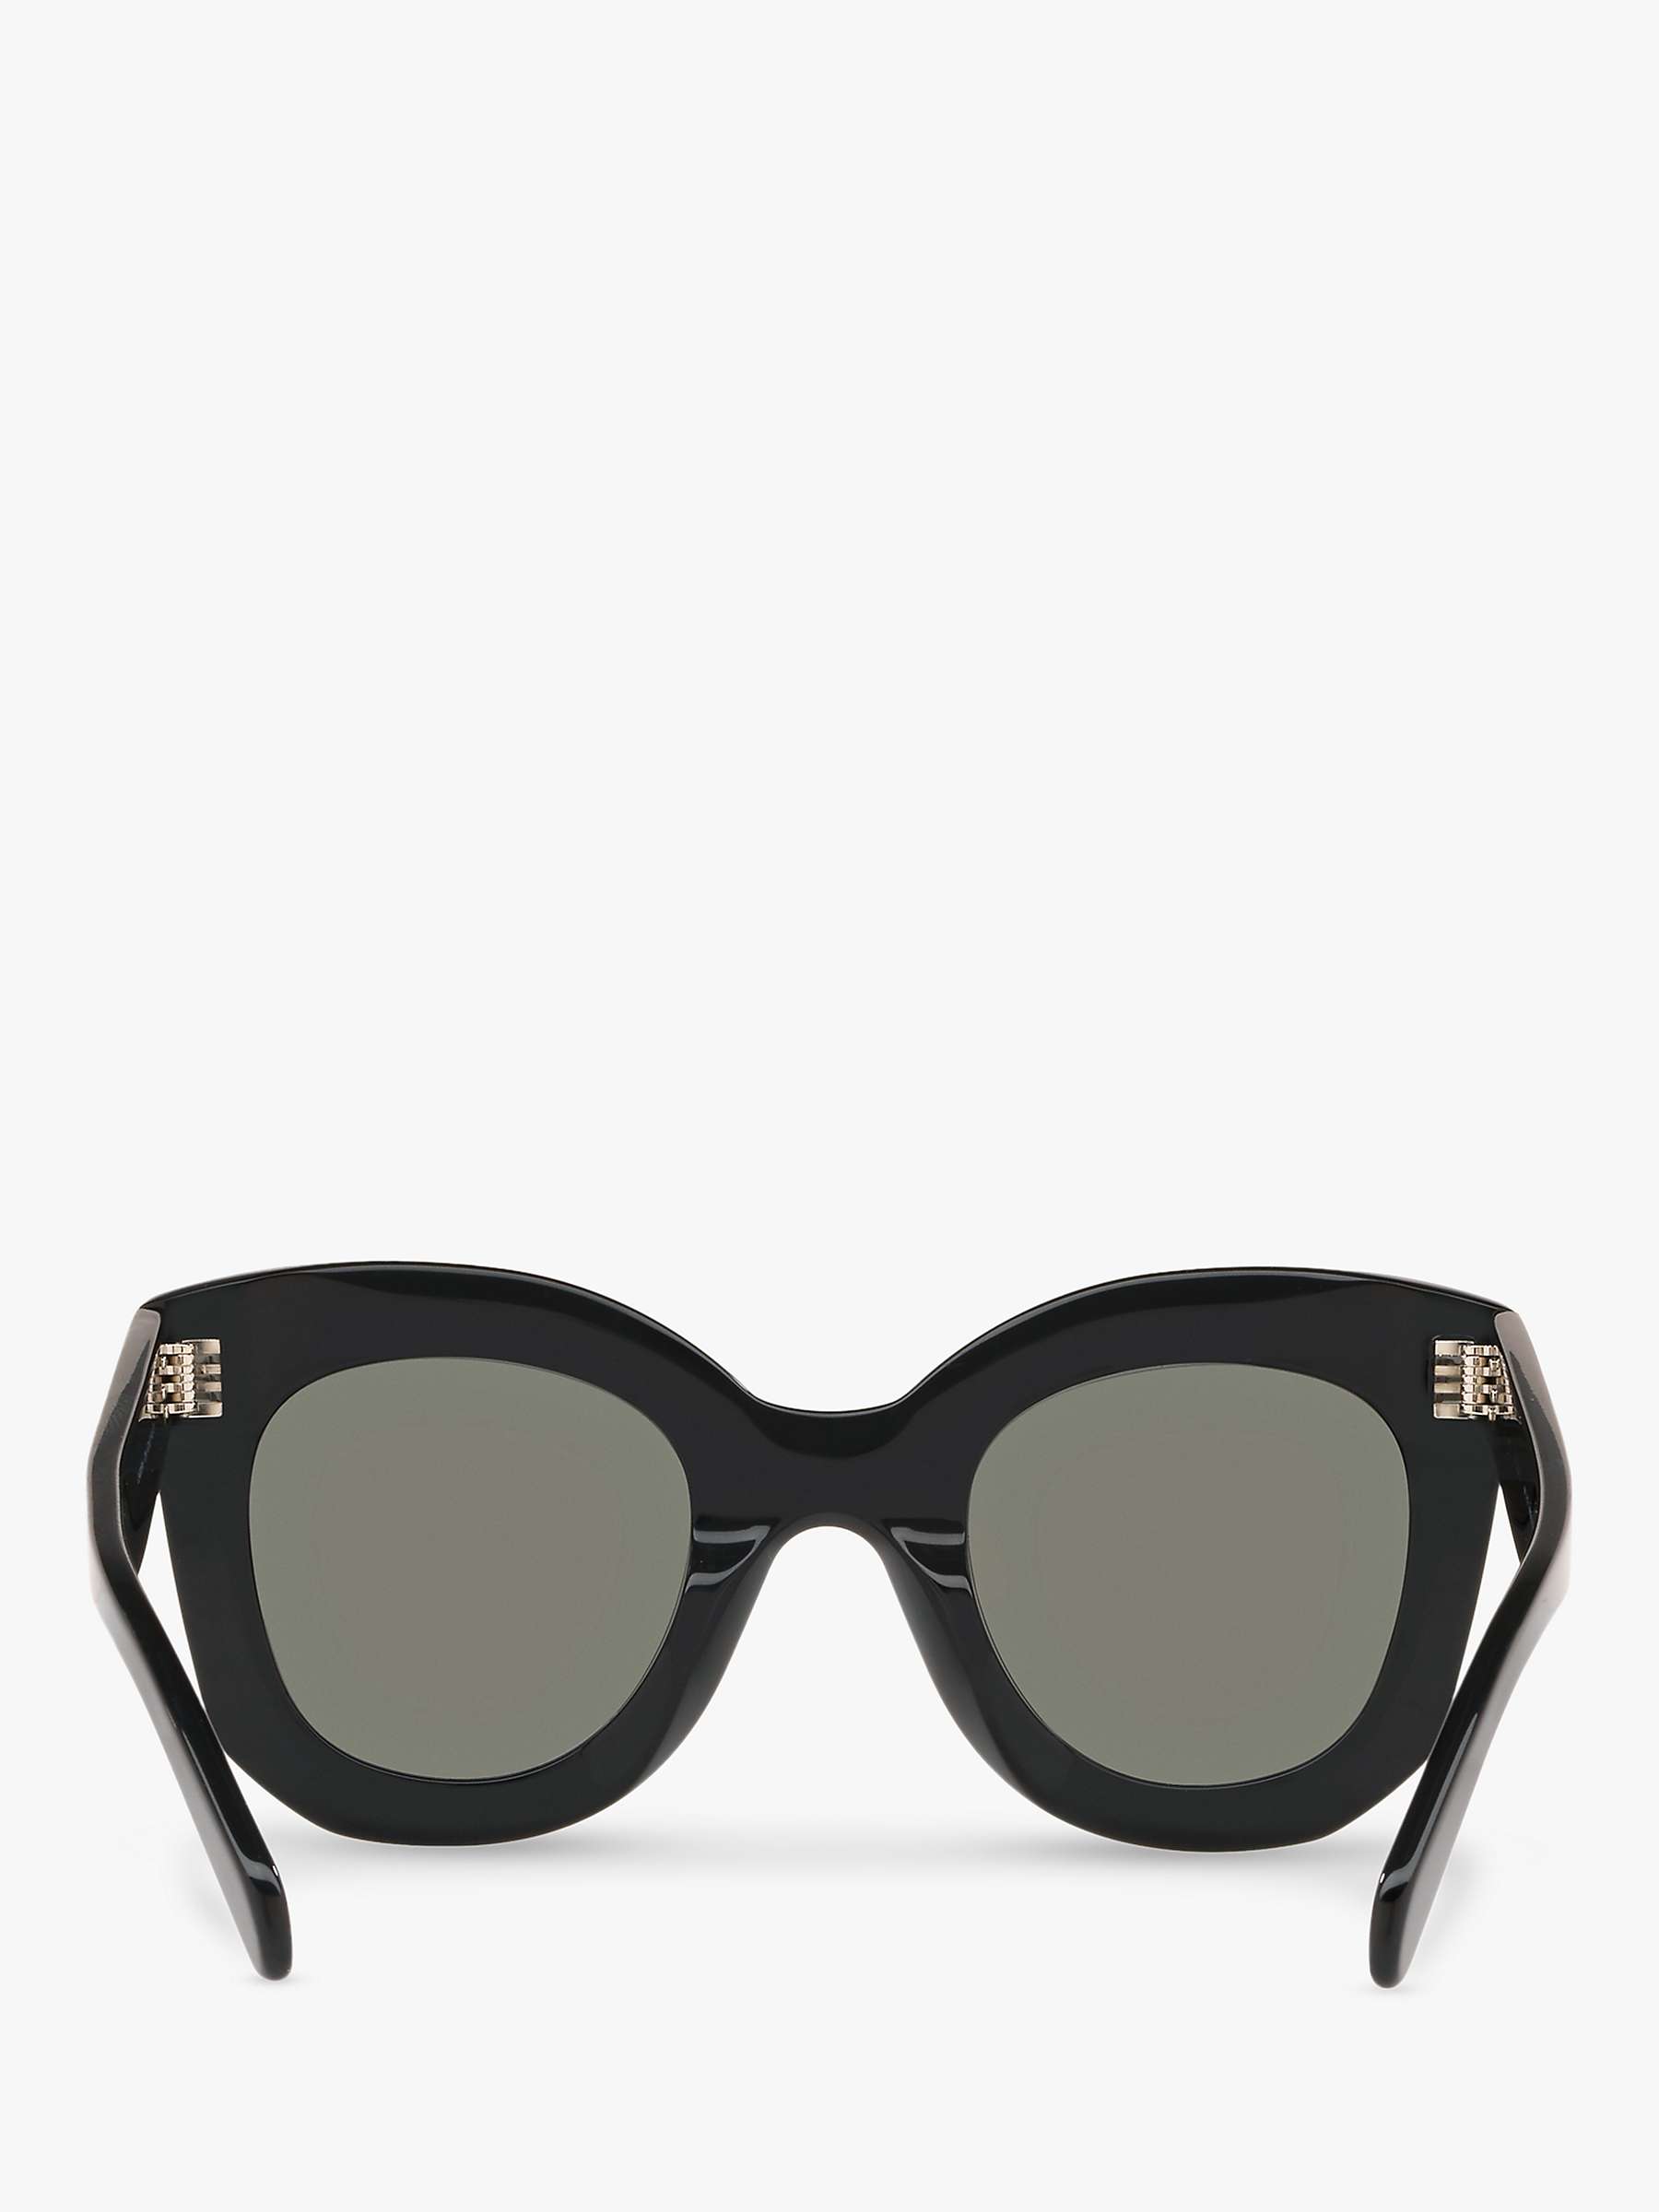 Buy Celine CL4005IN Women's Rectangular Sunglasses Online at johnlewis.com